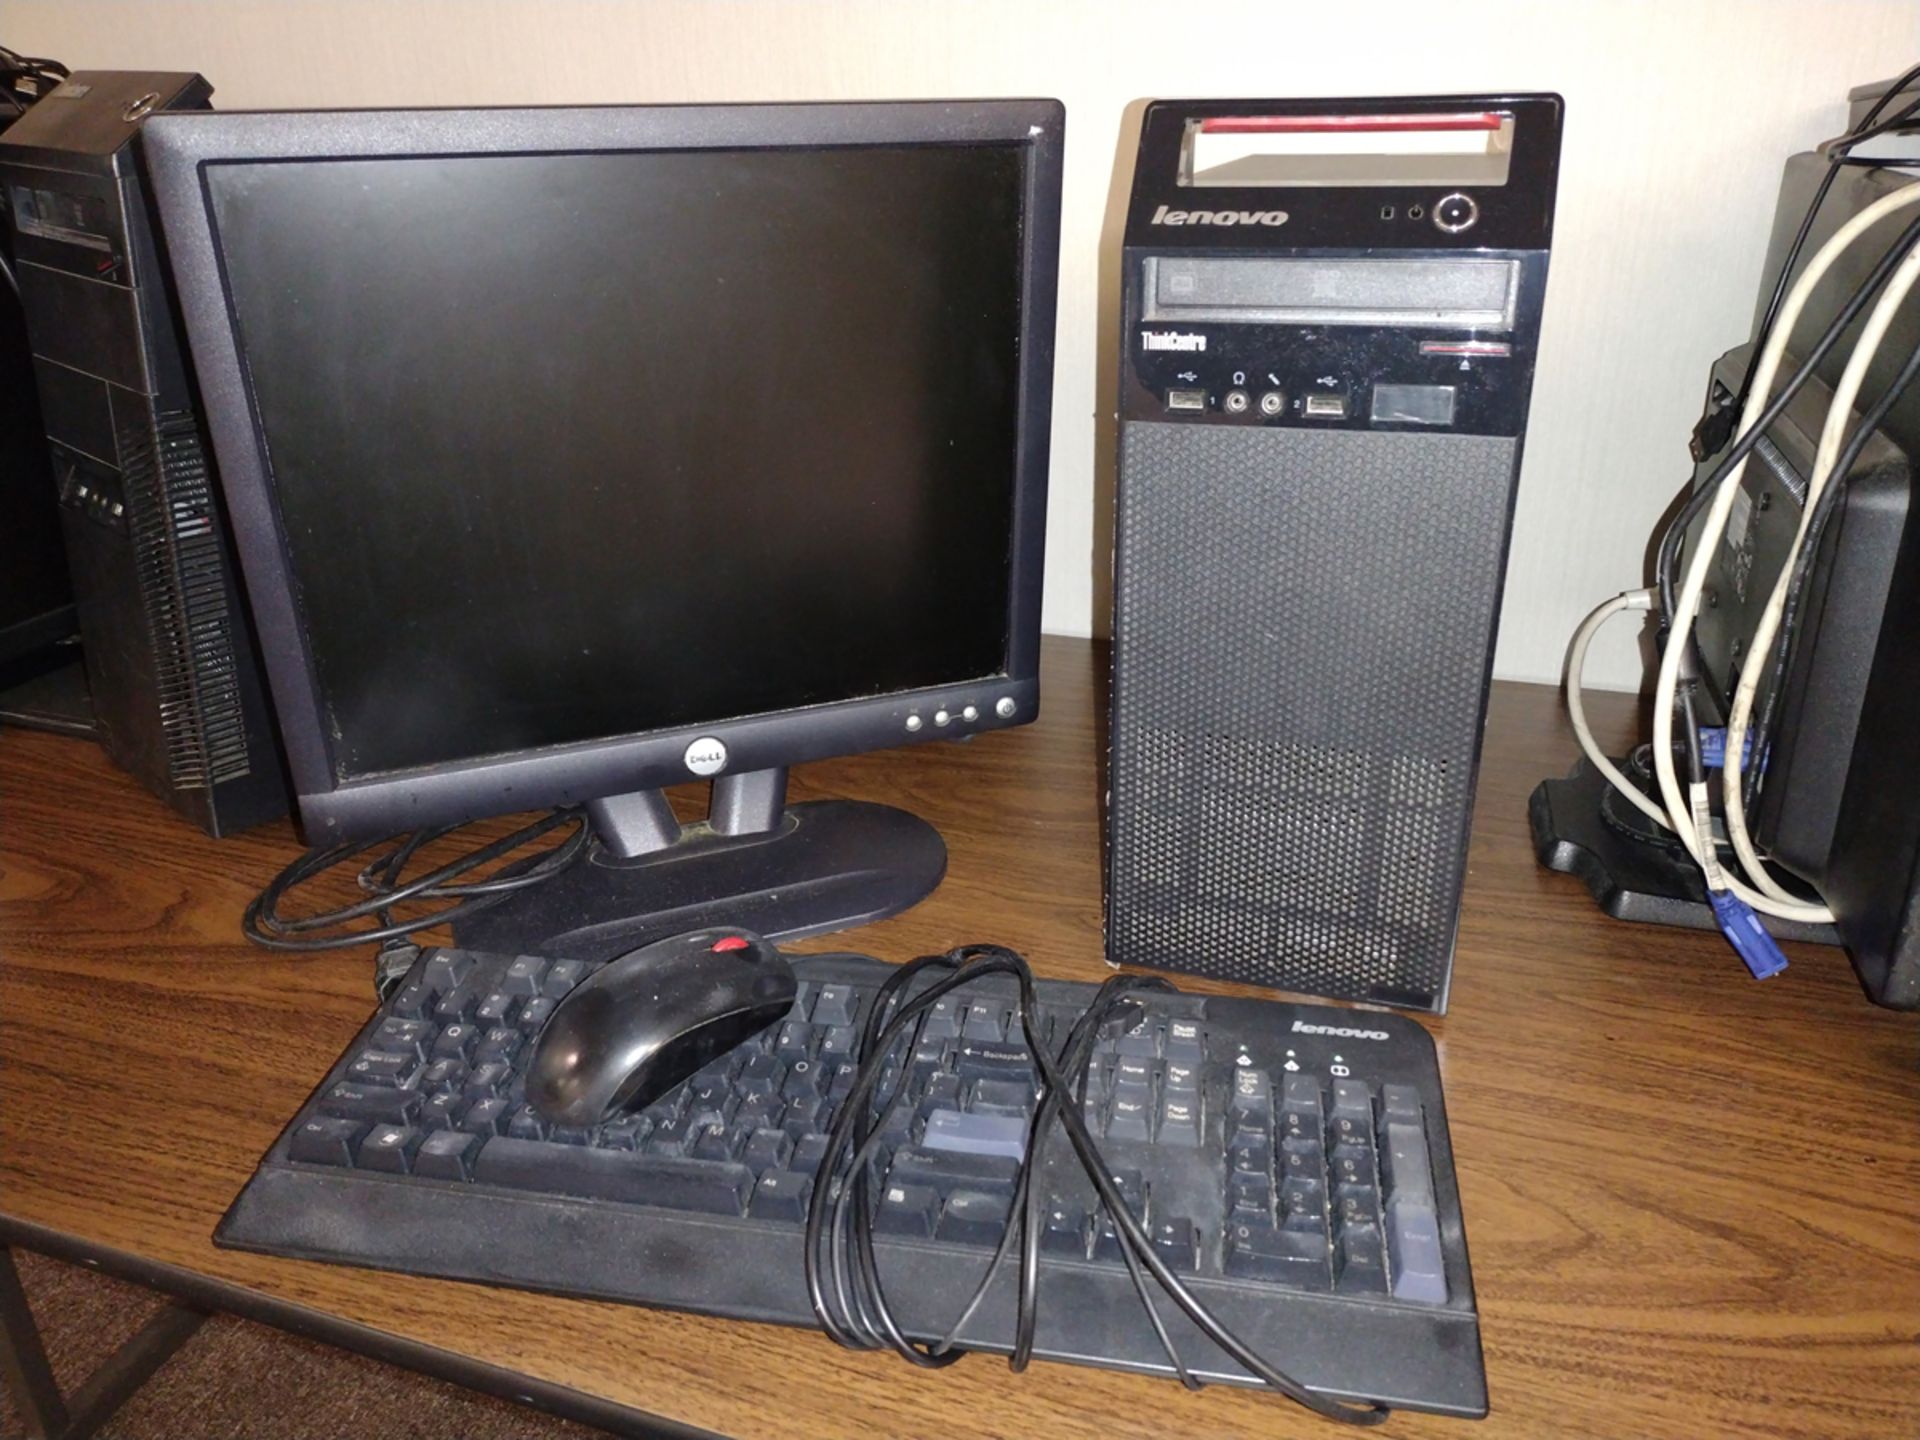 Lenovo ThinkCentre i3 PC w/ Monitor and Keyboard